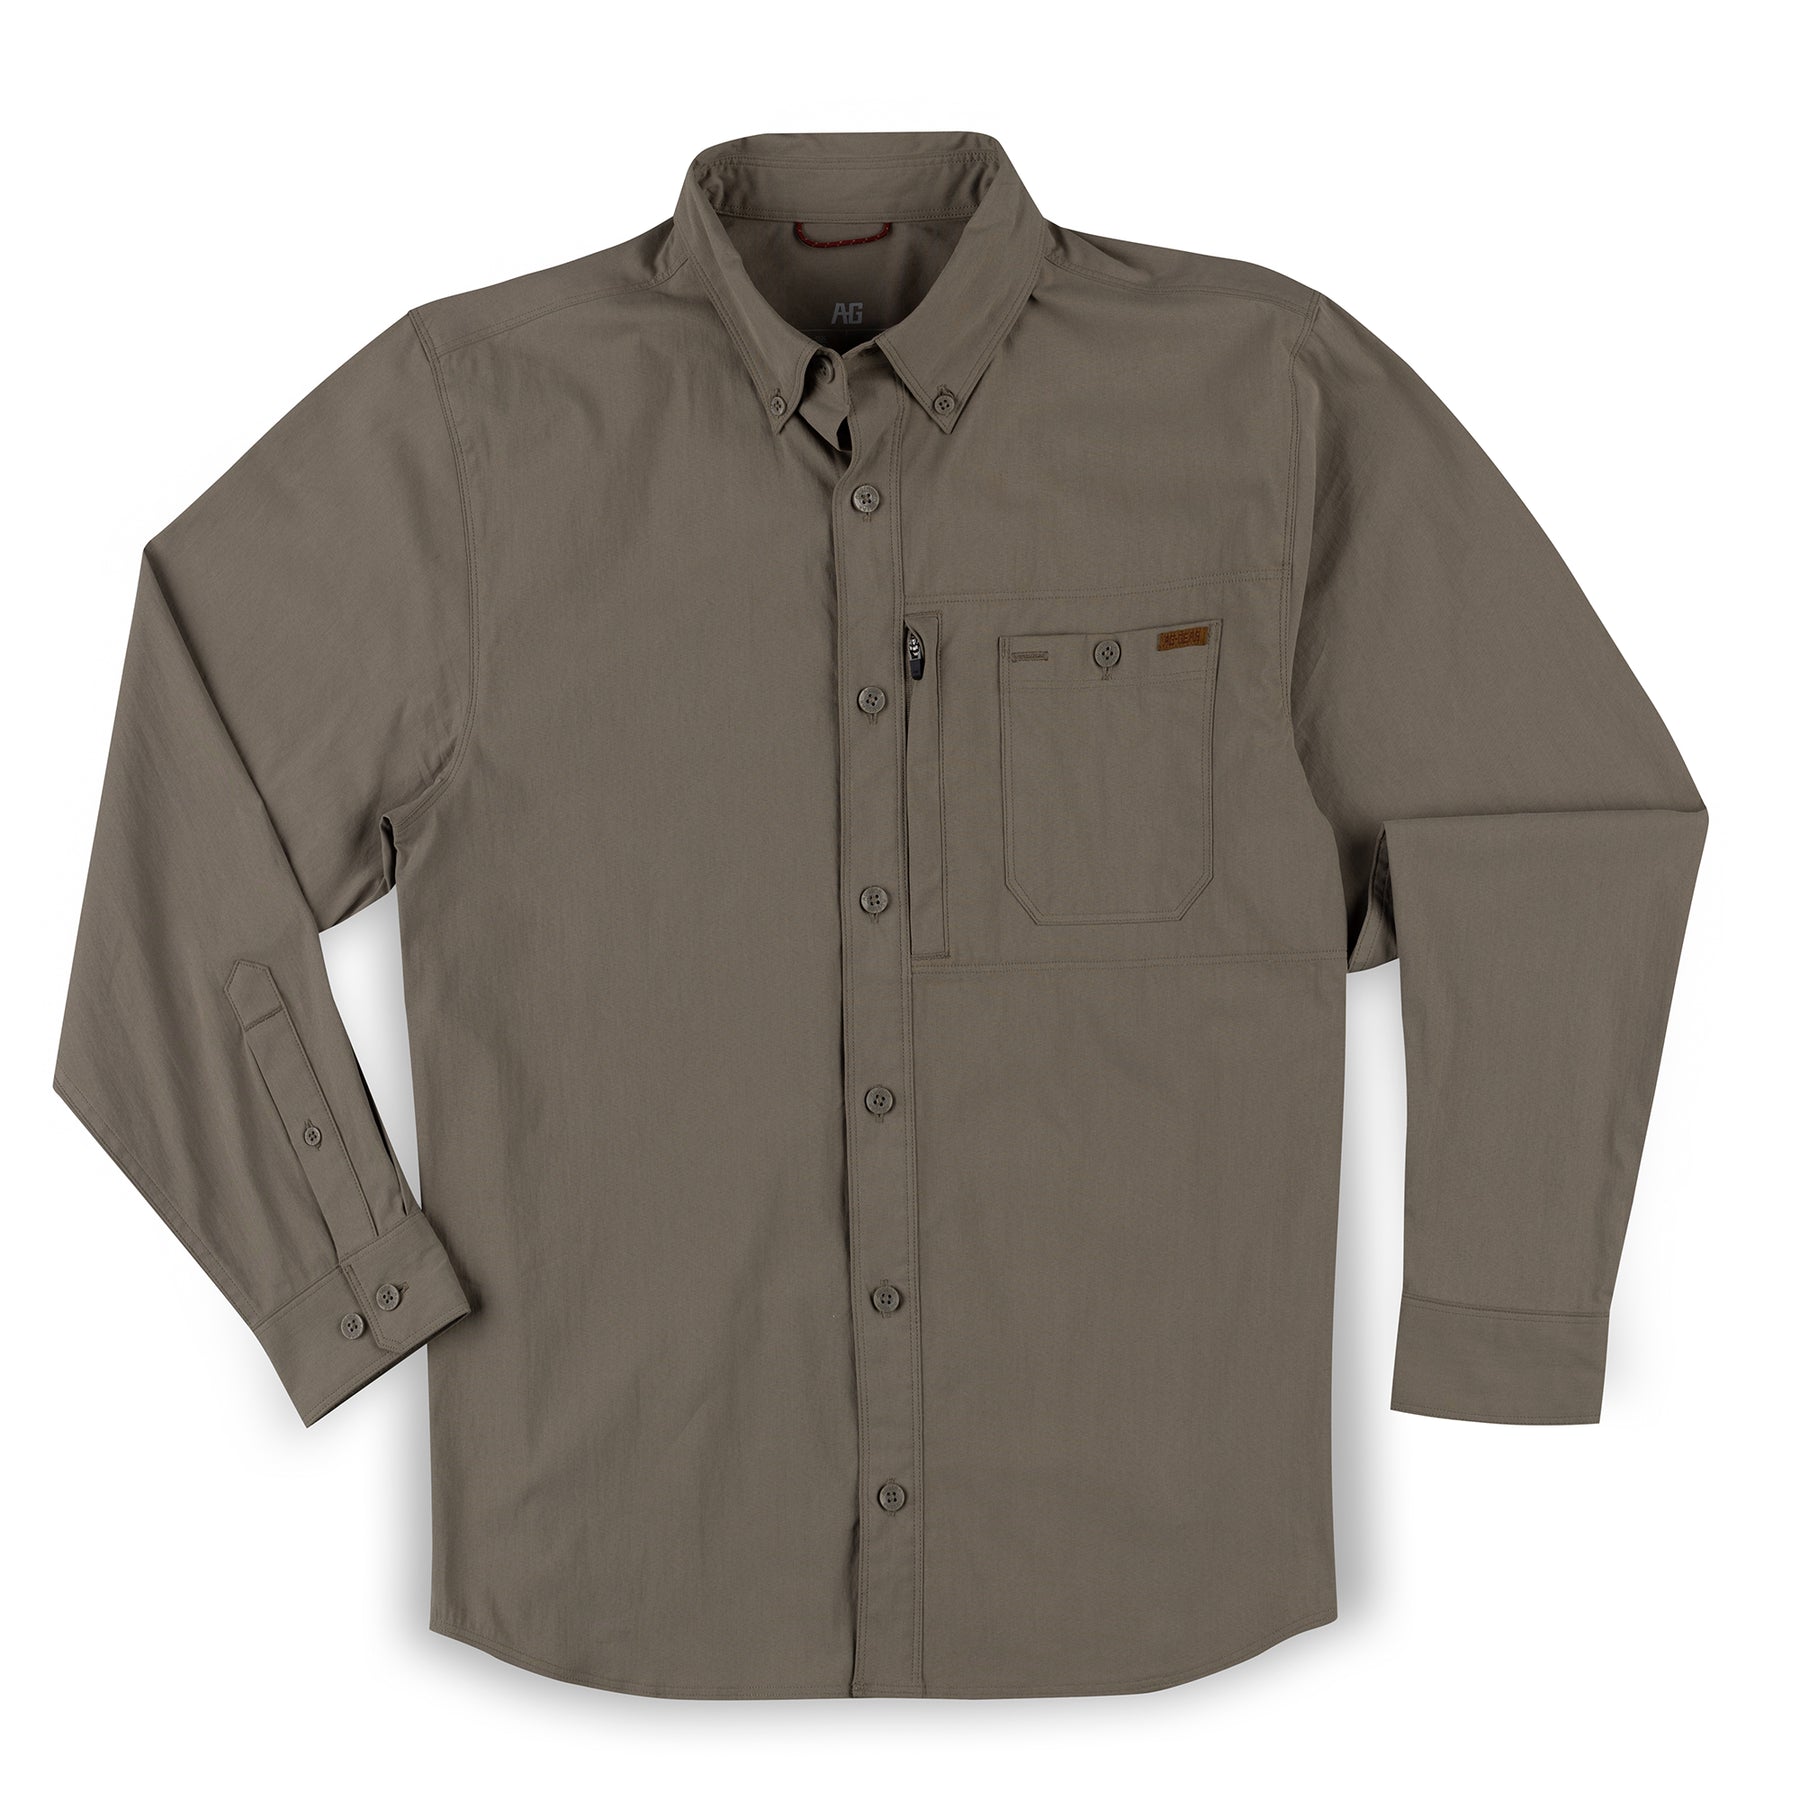 Cotton Farm Shirt, Durable, Water Resistant, Classic Fit, Ranch Shirt Navy / 3X